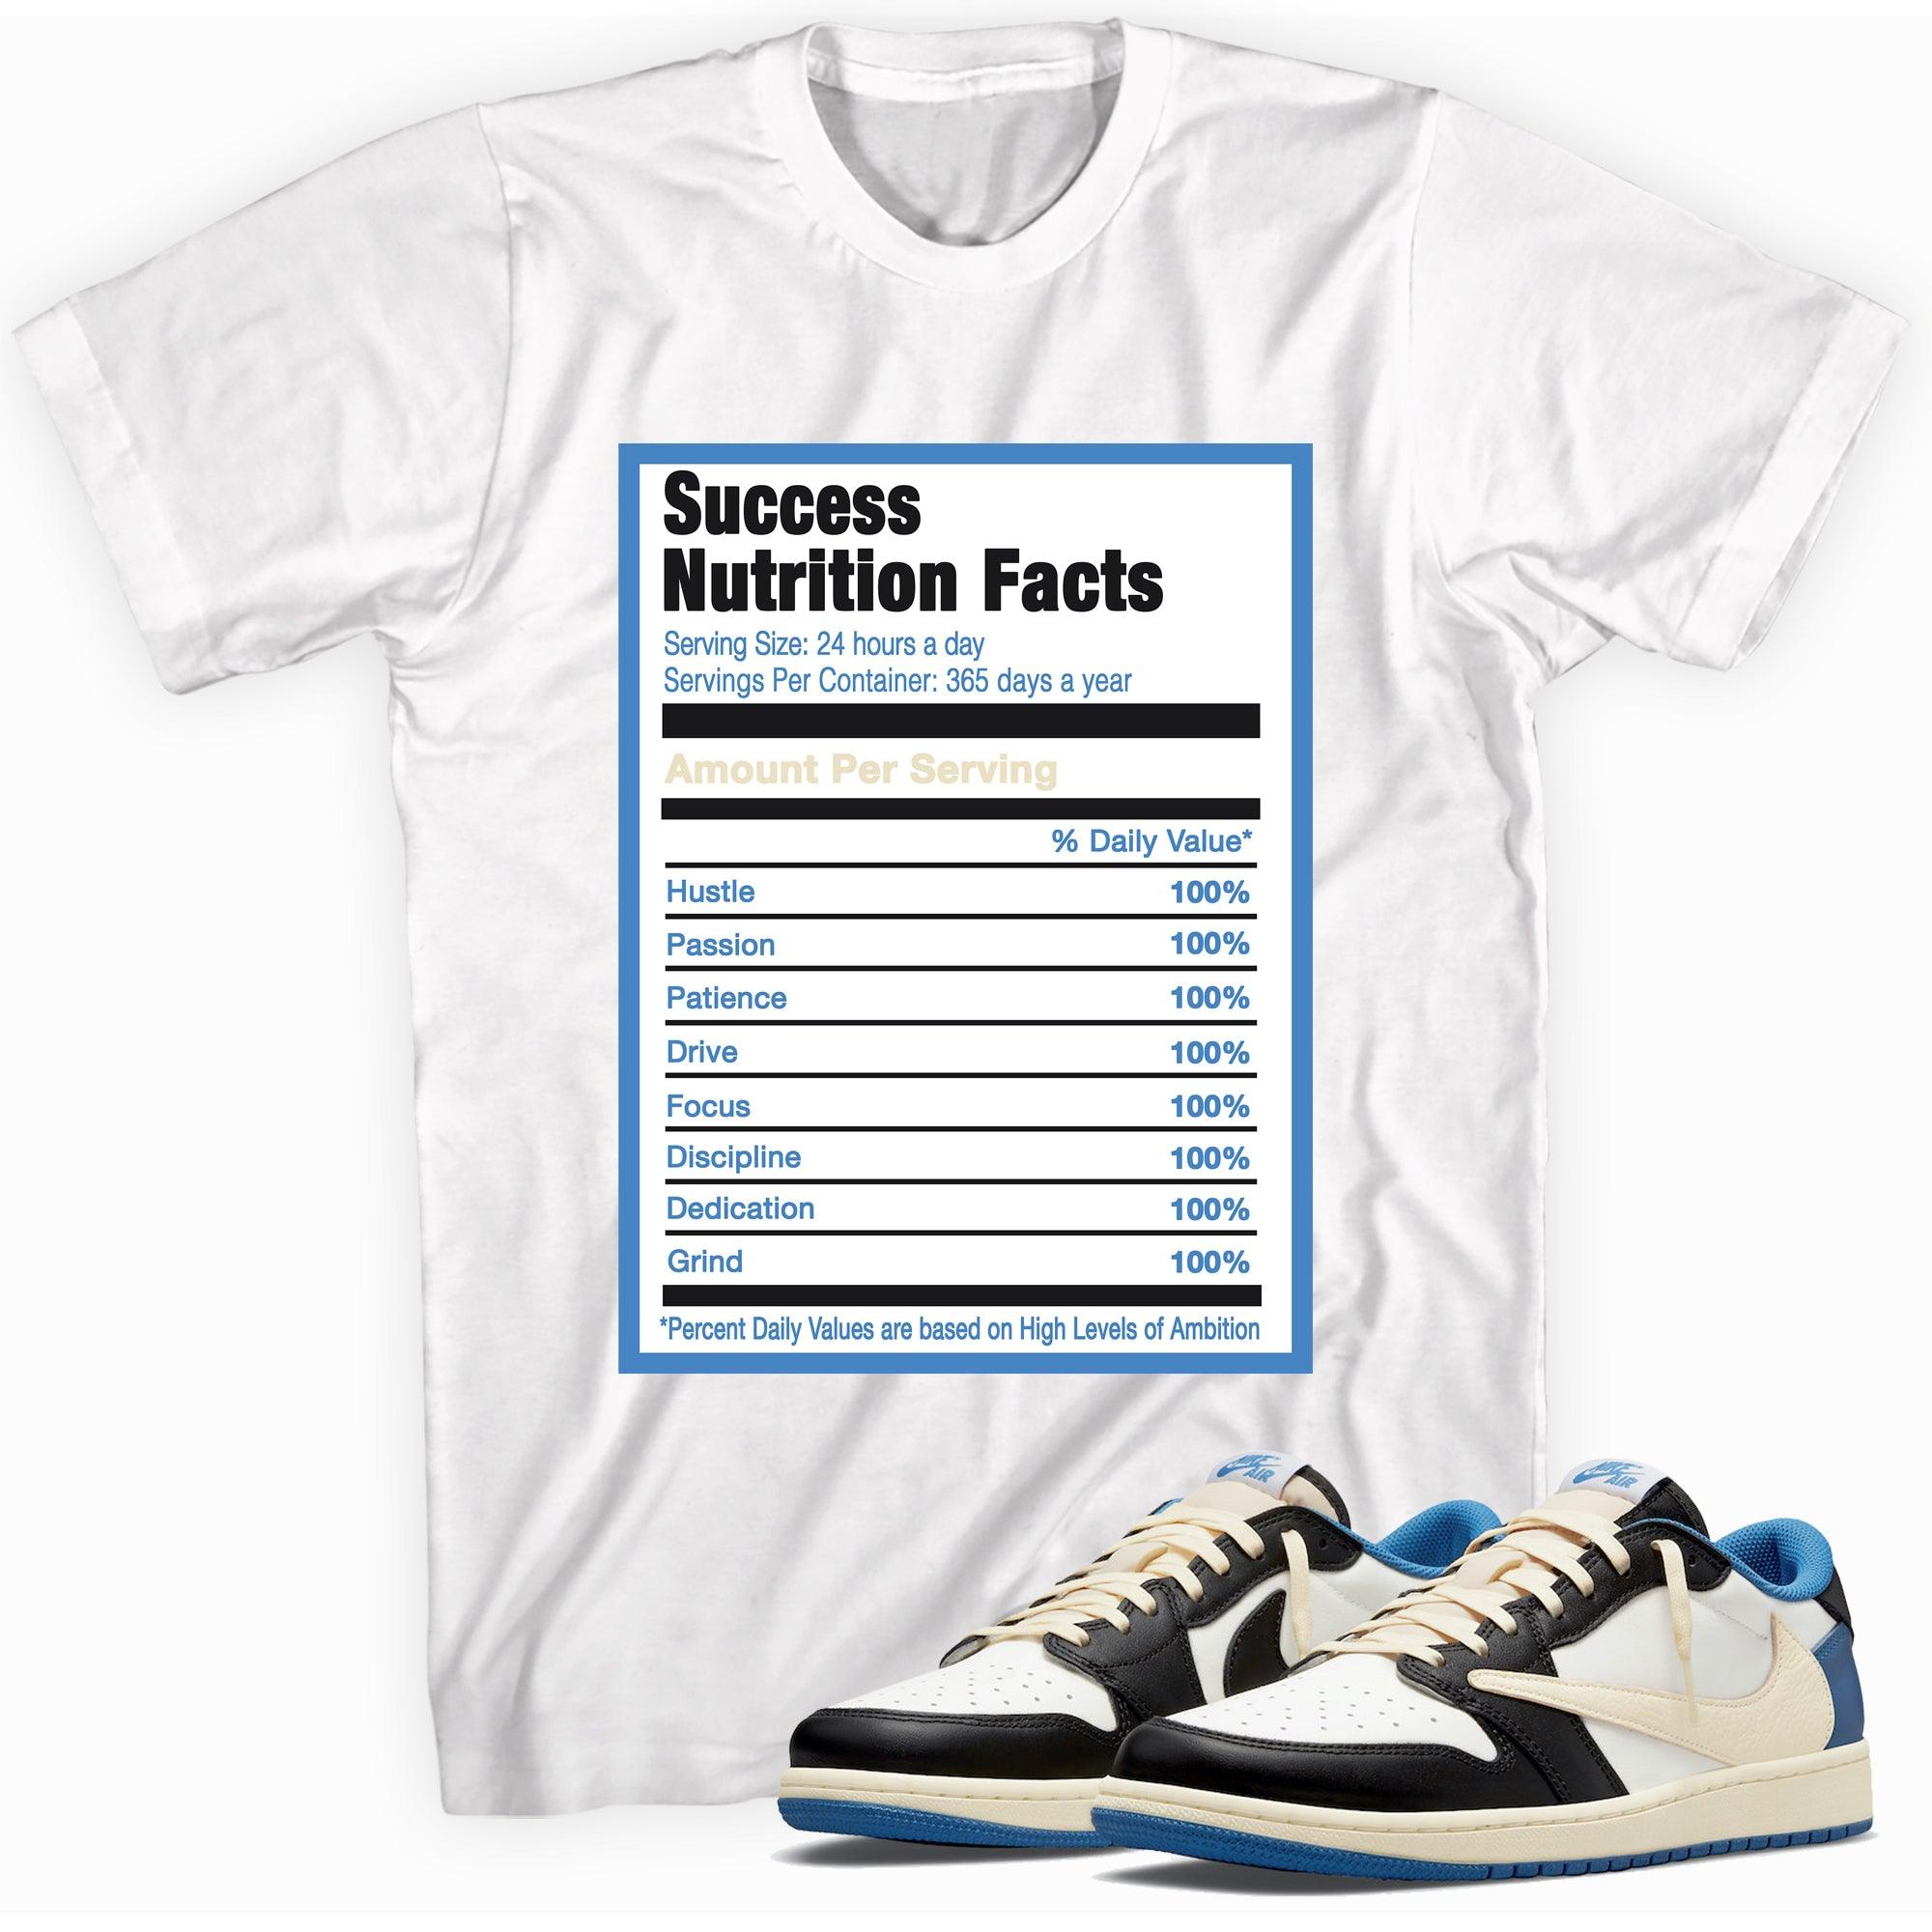 Success Nutrition Sneaker Tee AJ 1 Low Fragment x Travis Scott photo